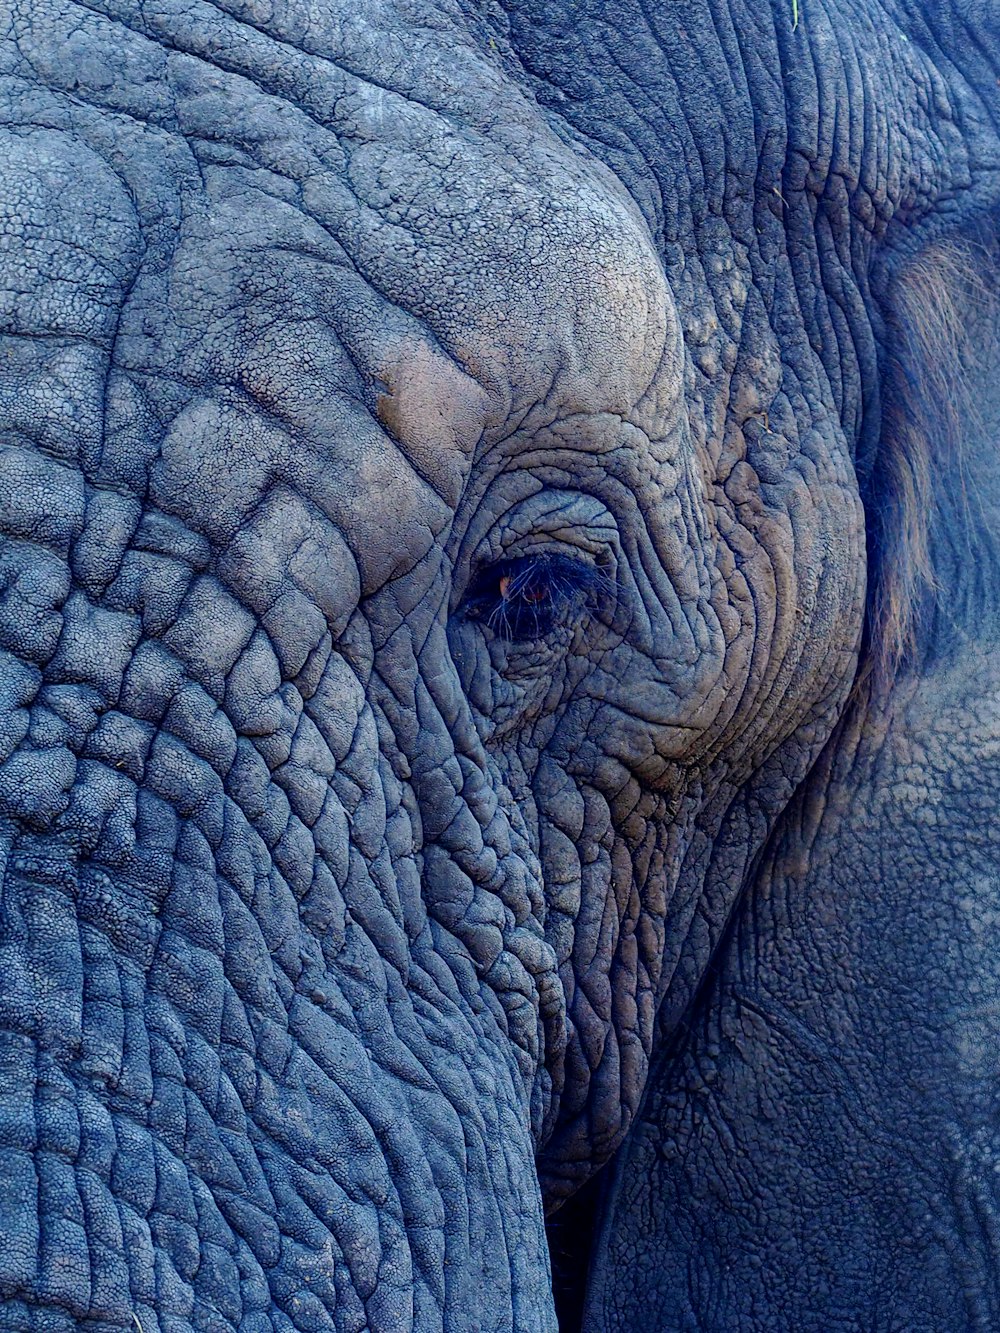 macro photography of elephant's face